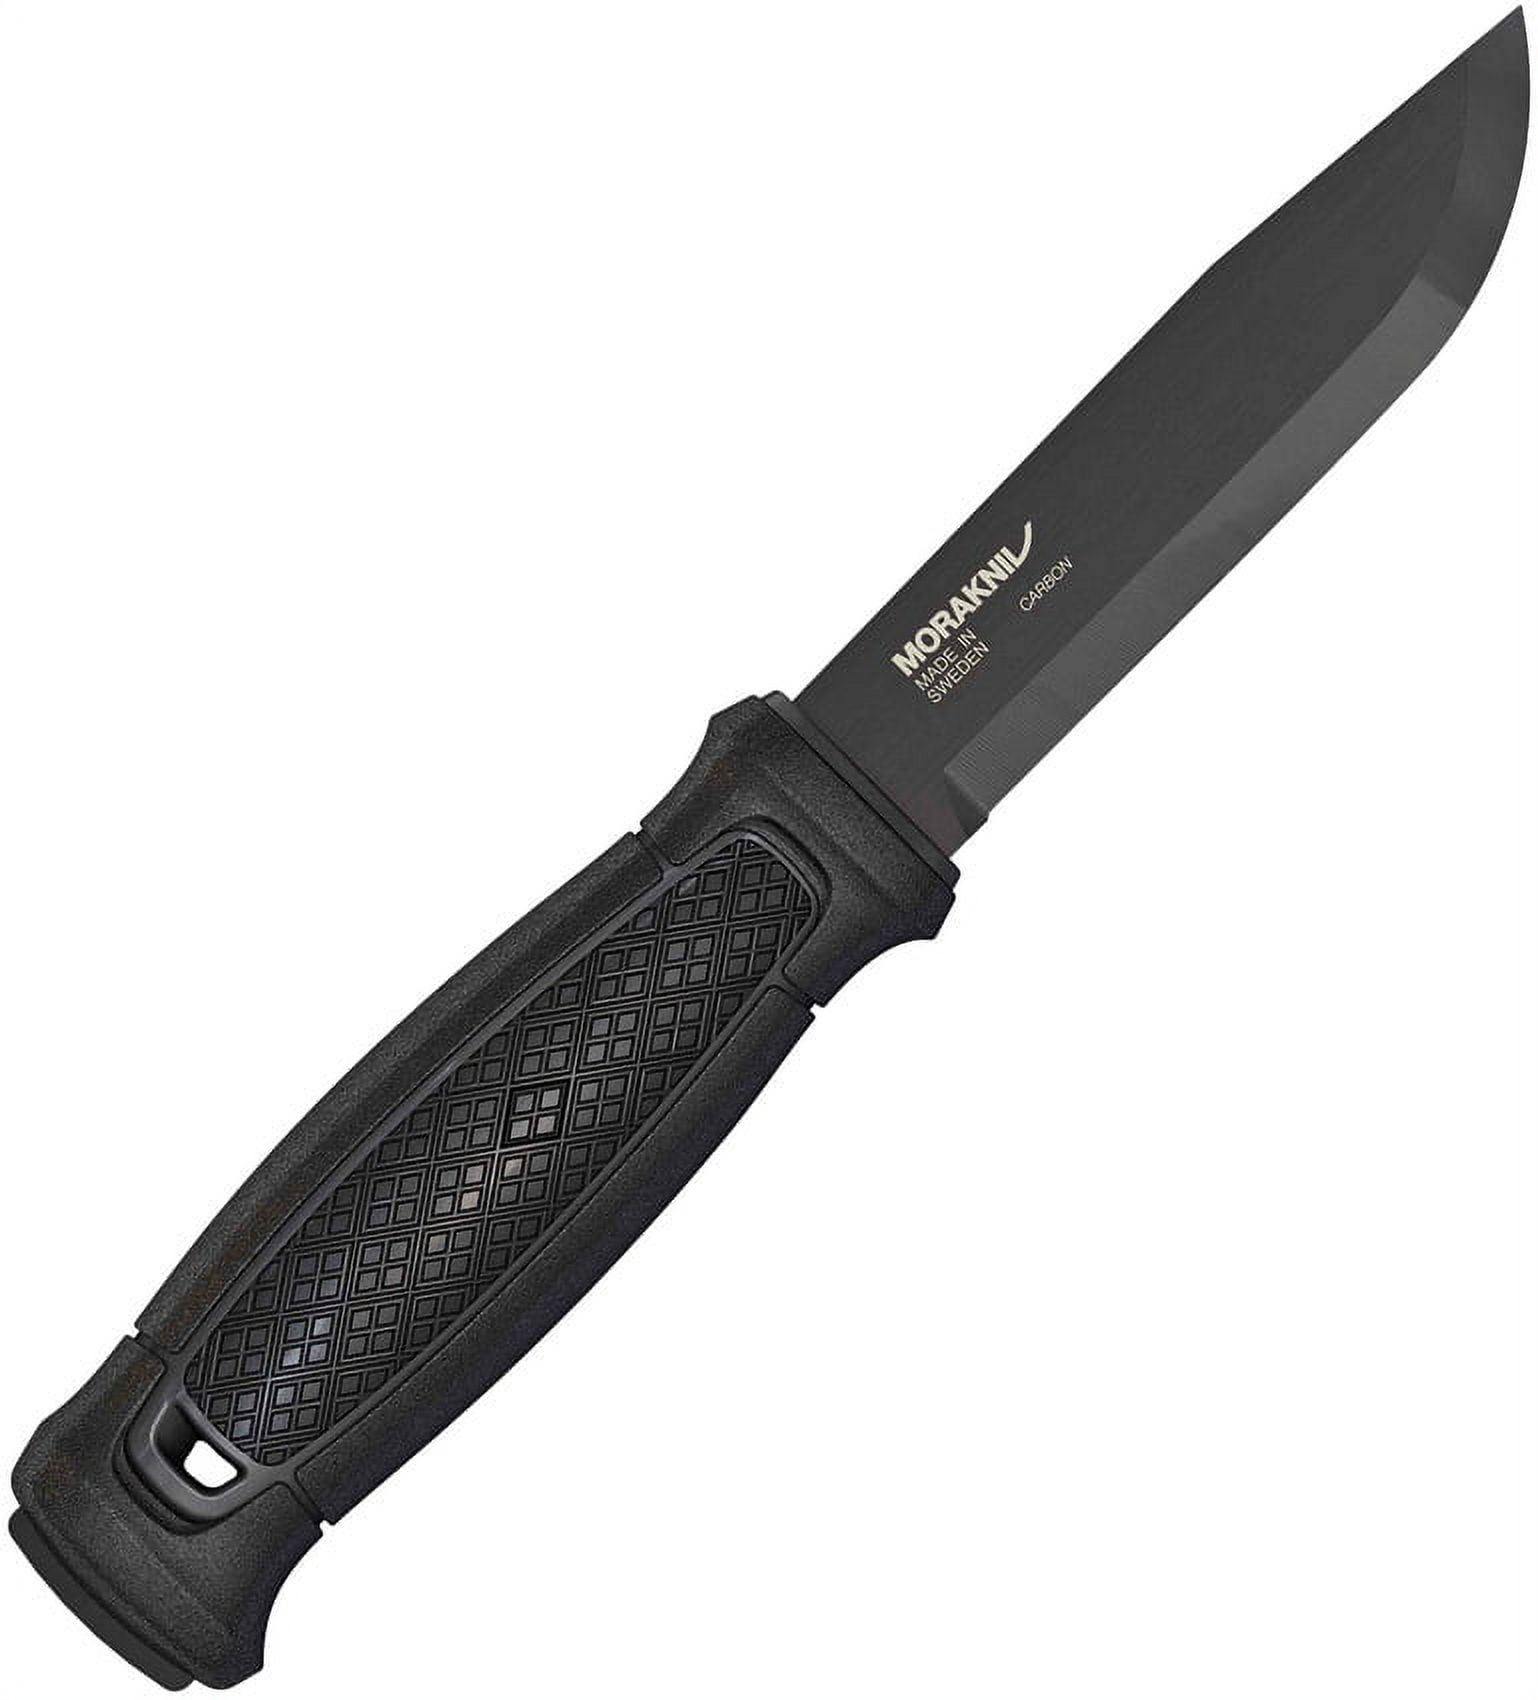 Morakniv Garberg Full Tang Fixed Blade Knife with Carbon Steel